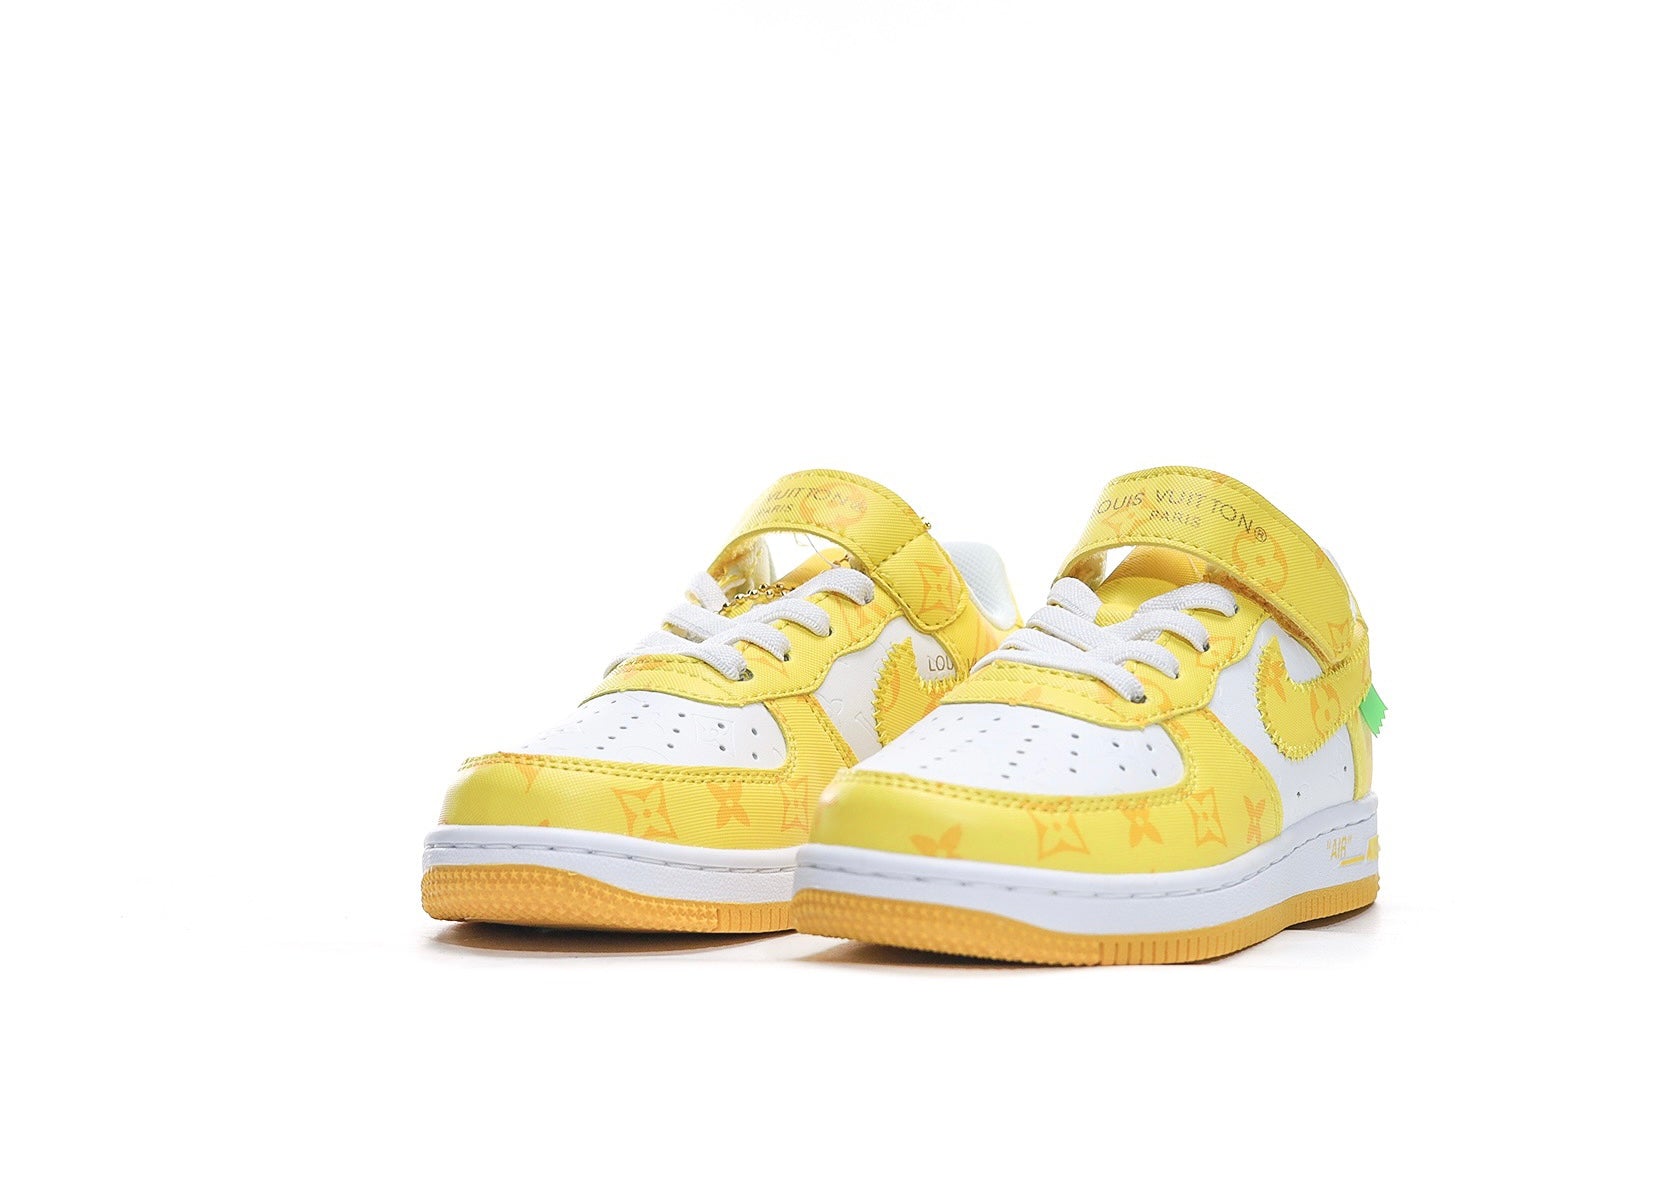 Louis vuitton nike Air Force 1 yellow shoes